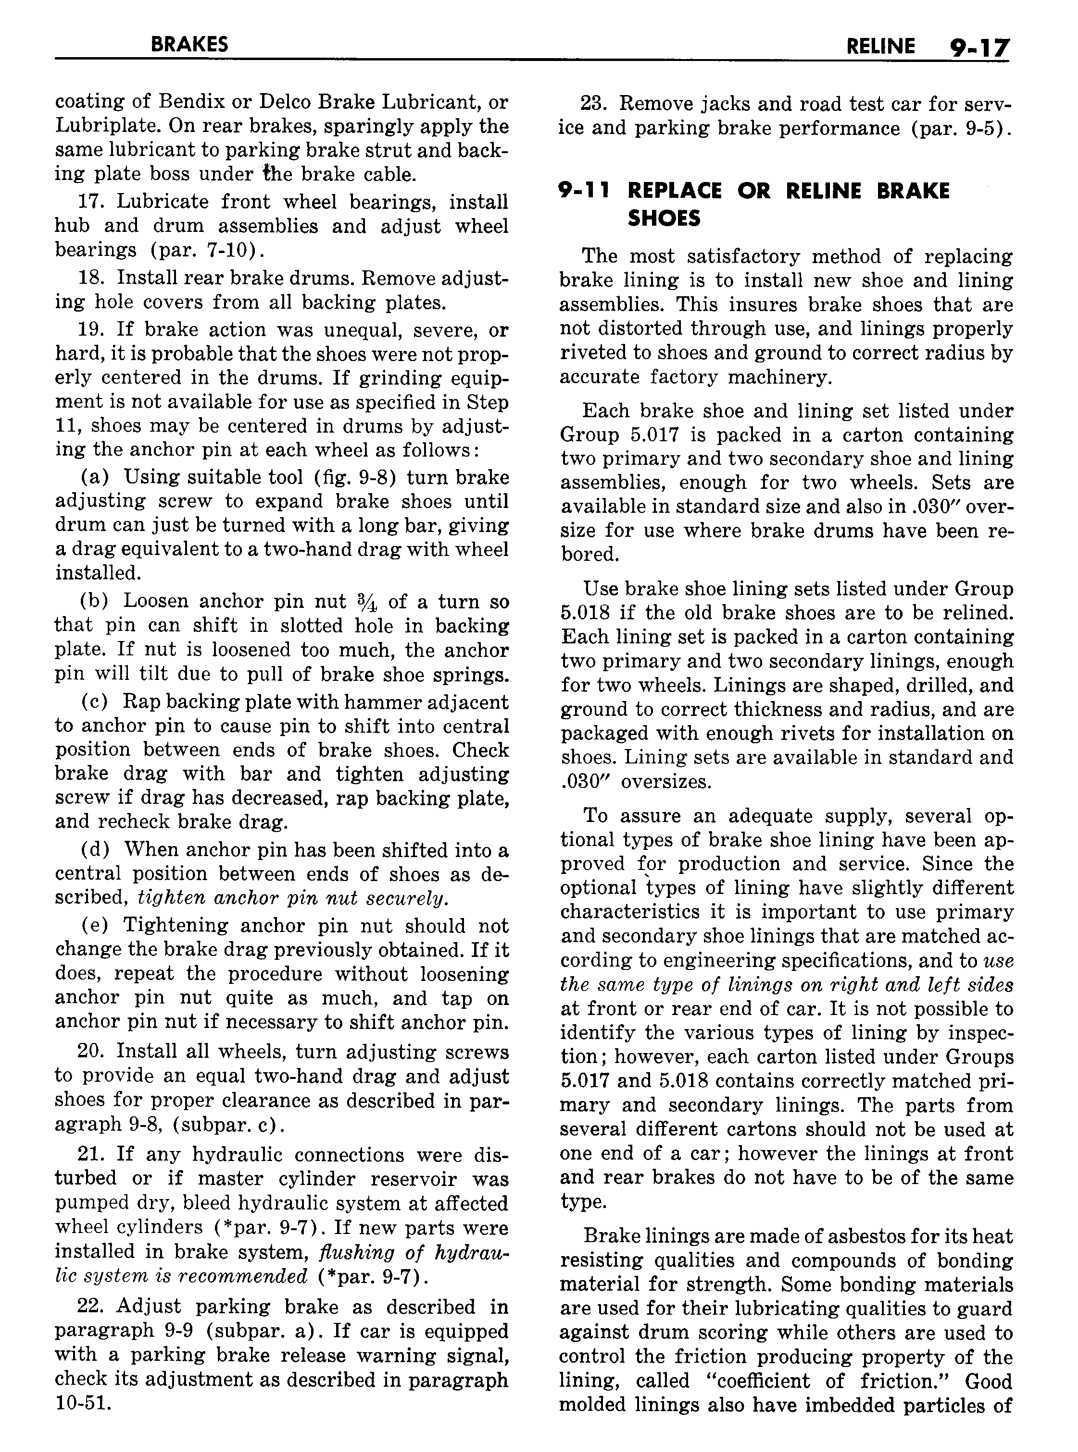 n_10 1957 Buick Shop Manual - Brakes-017-017.jpg